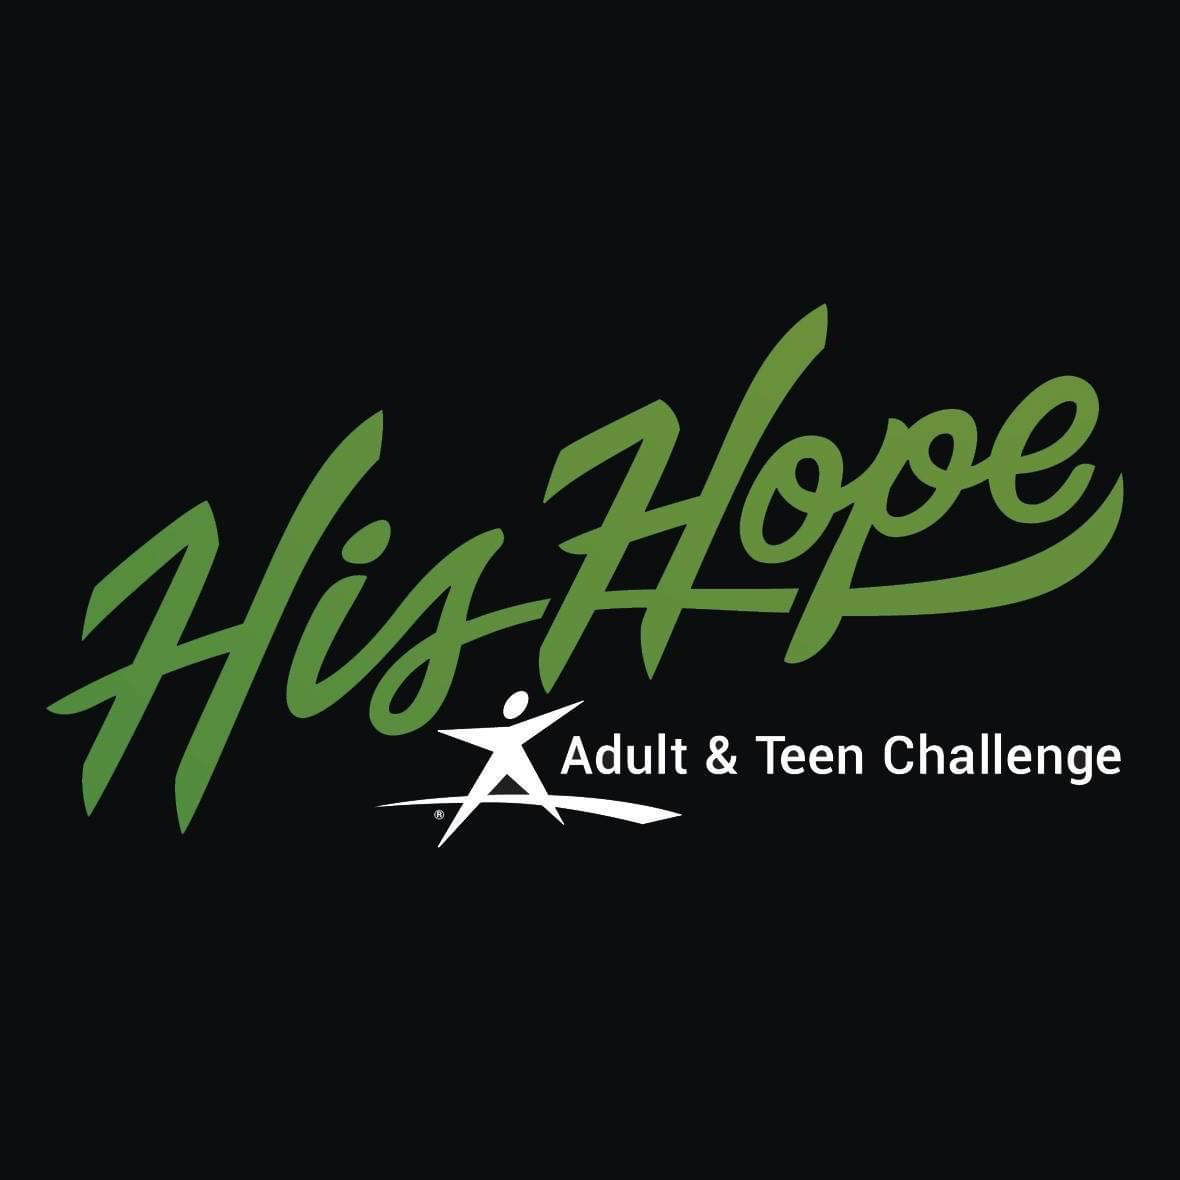 His Hope Adult & Teen Challenge